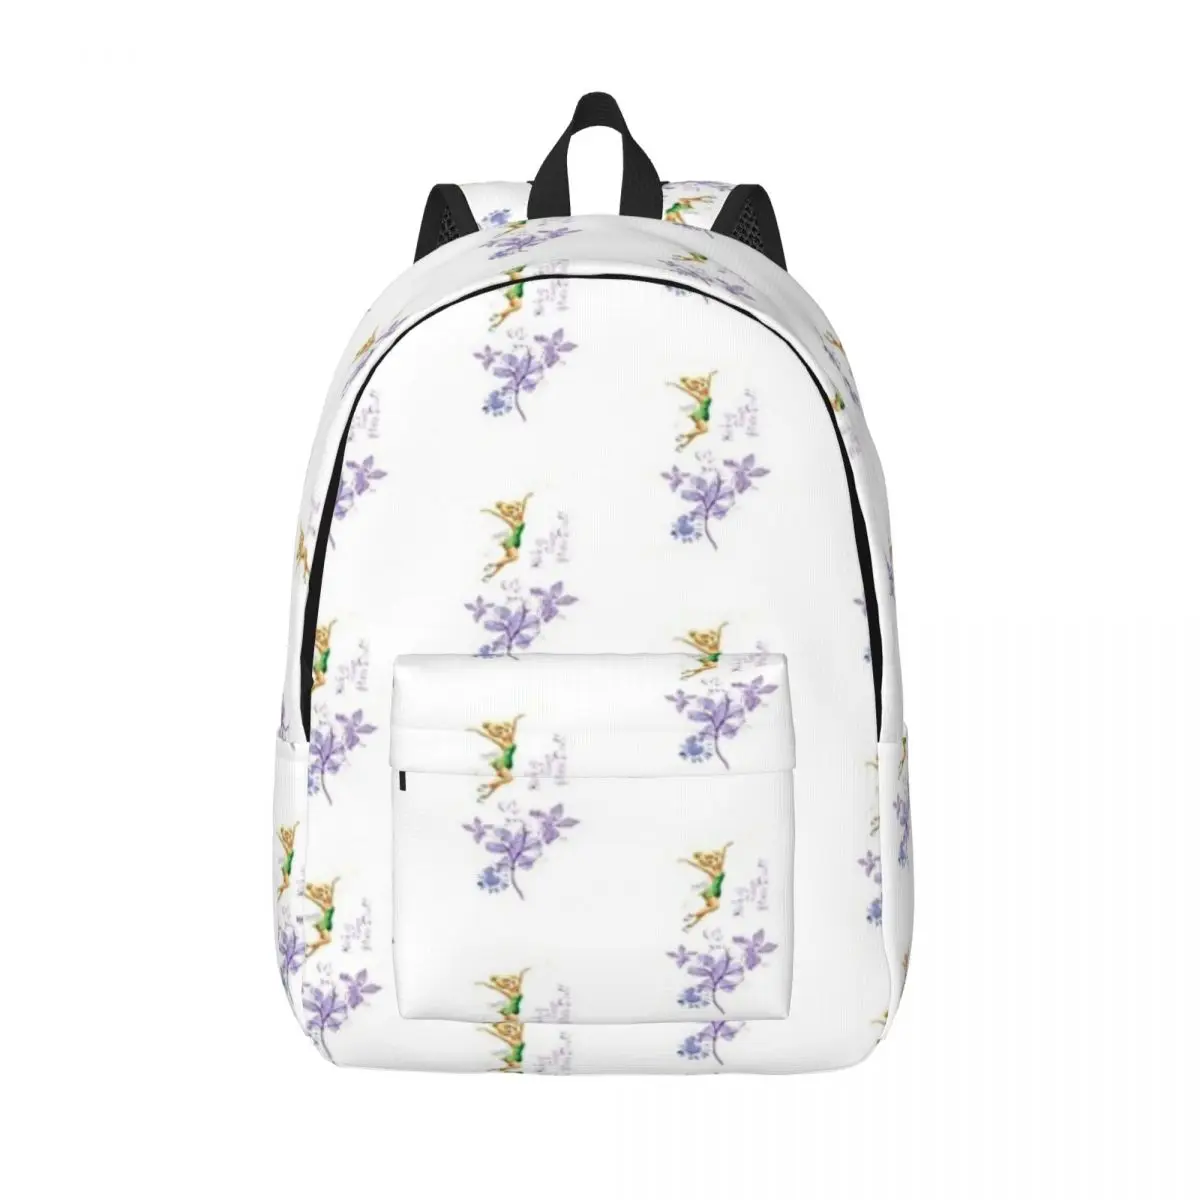 

Tinkerbell Woman Small Backpacks Boys Girls Bookbag Fashion Shoulder Bag Portability Travel Rucksack Students School Bags